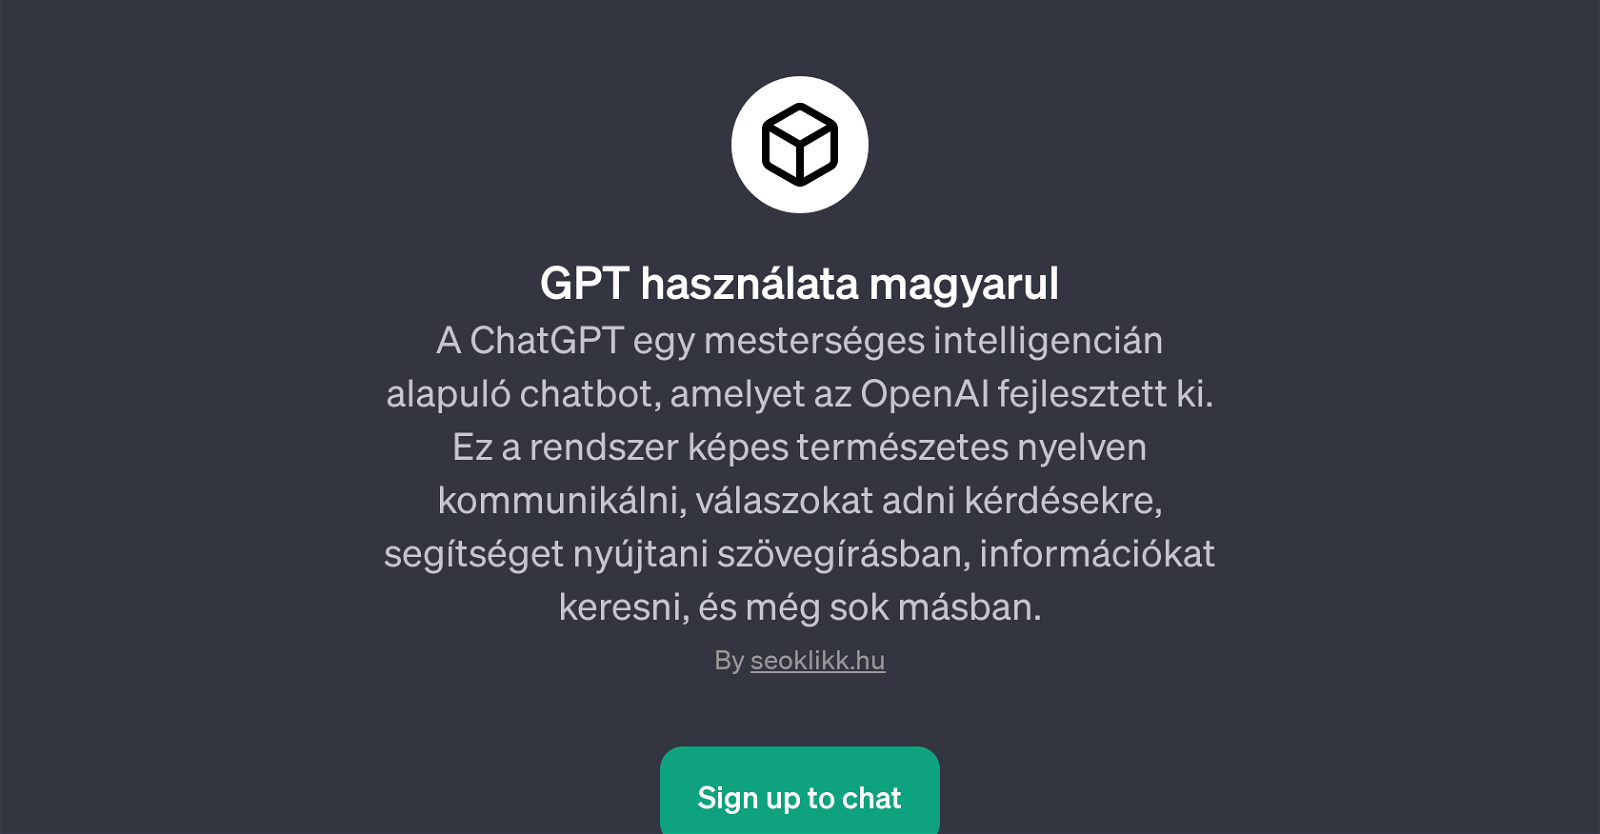 GPT hasznlata magyarul website